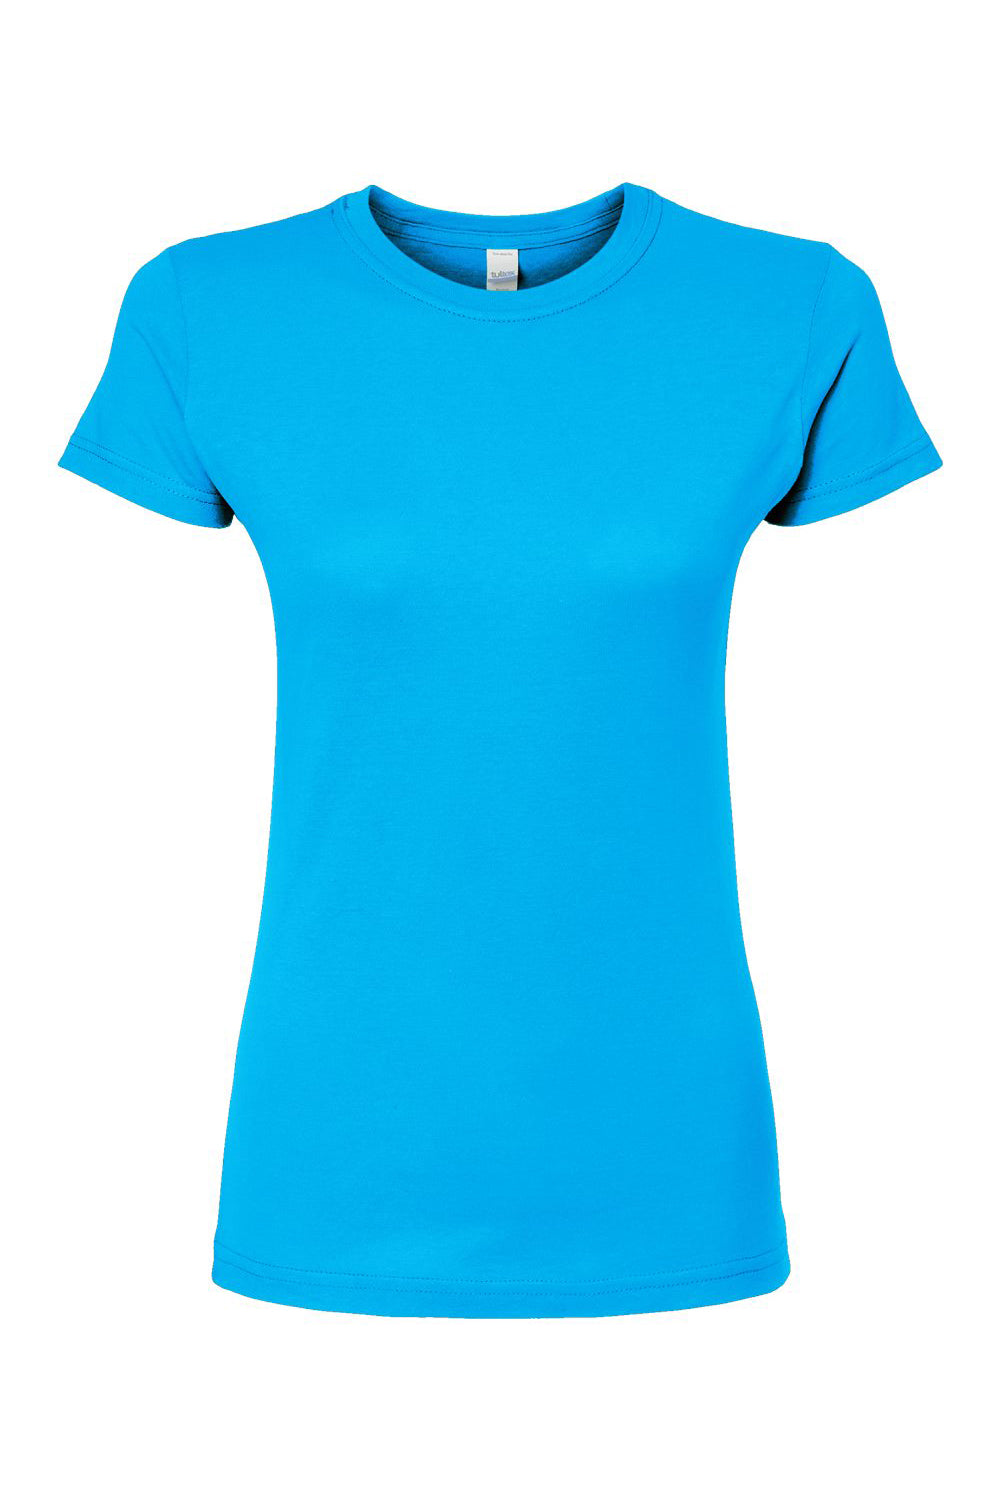 Tultex 213 Womens Fine Jersey Slim Fit Short Sleeve Crewneck T-Shirt Turquoise Blue Flat Front